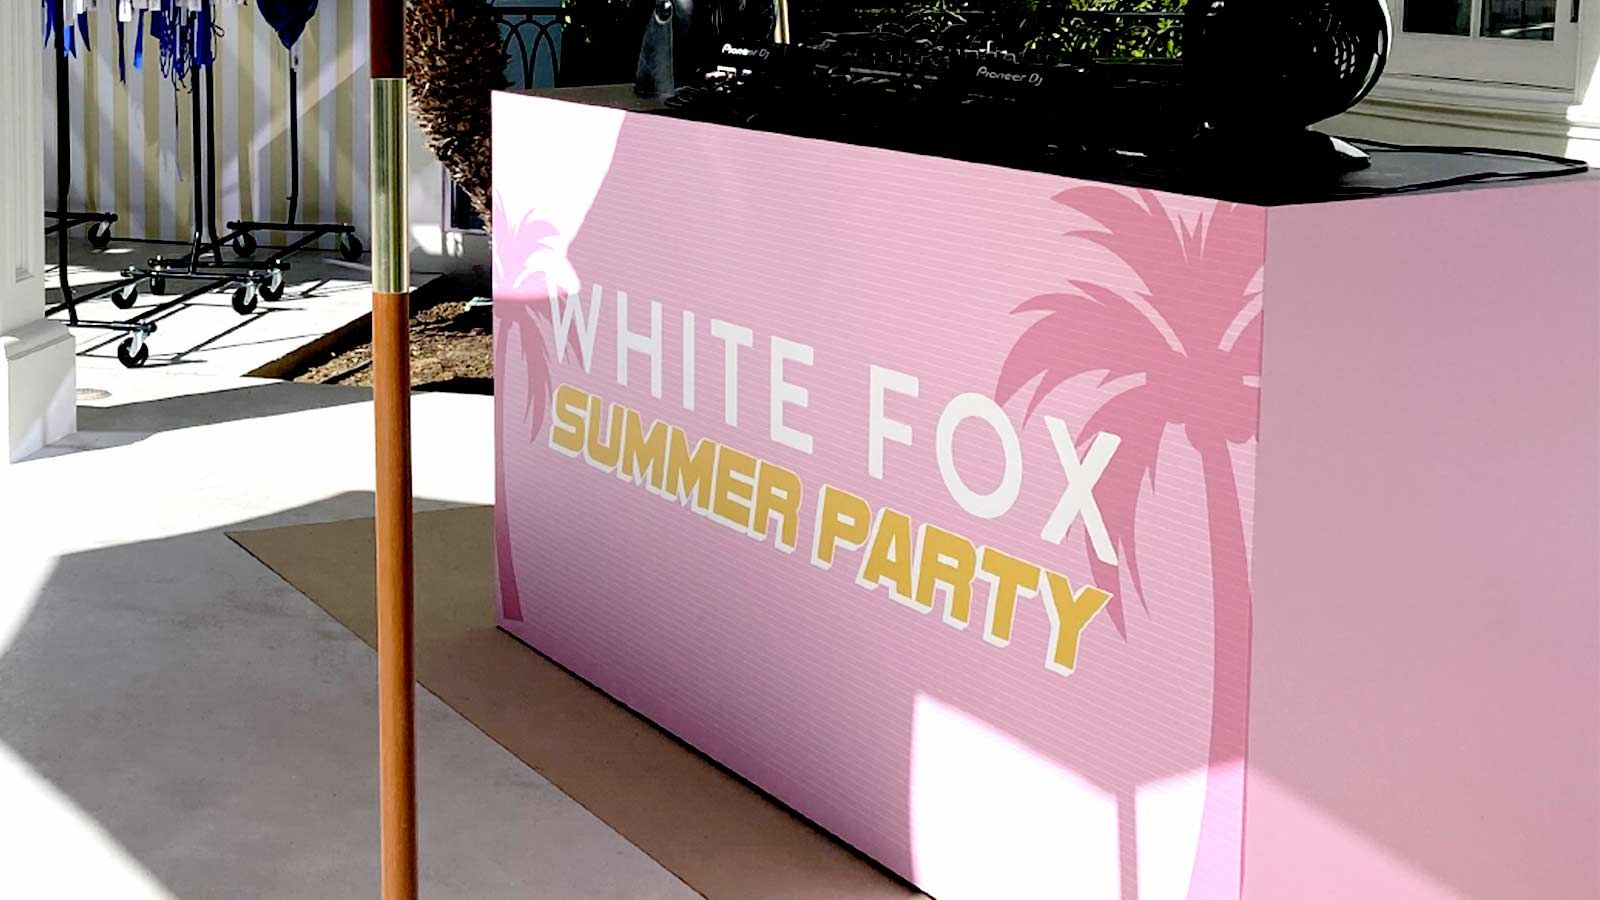 White Fox custom decal displayed outdoors